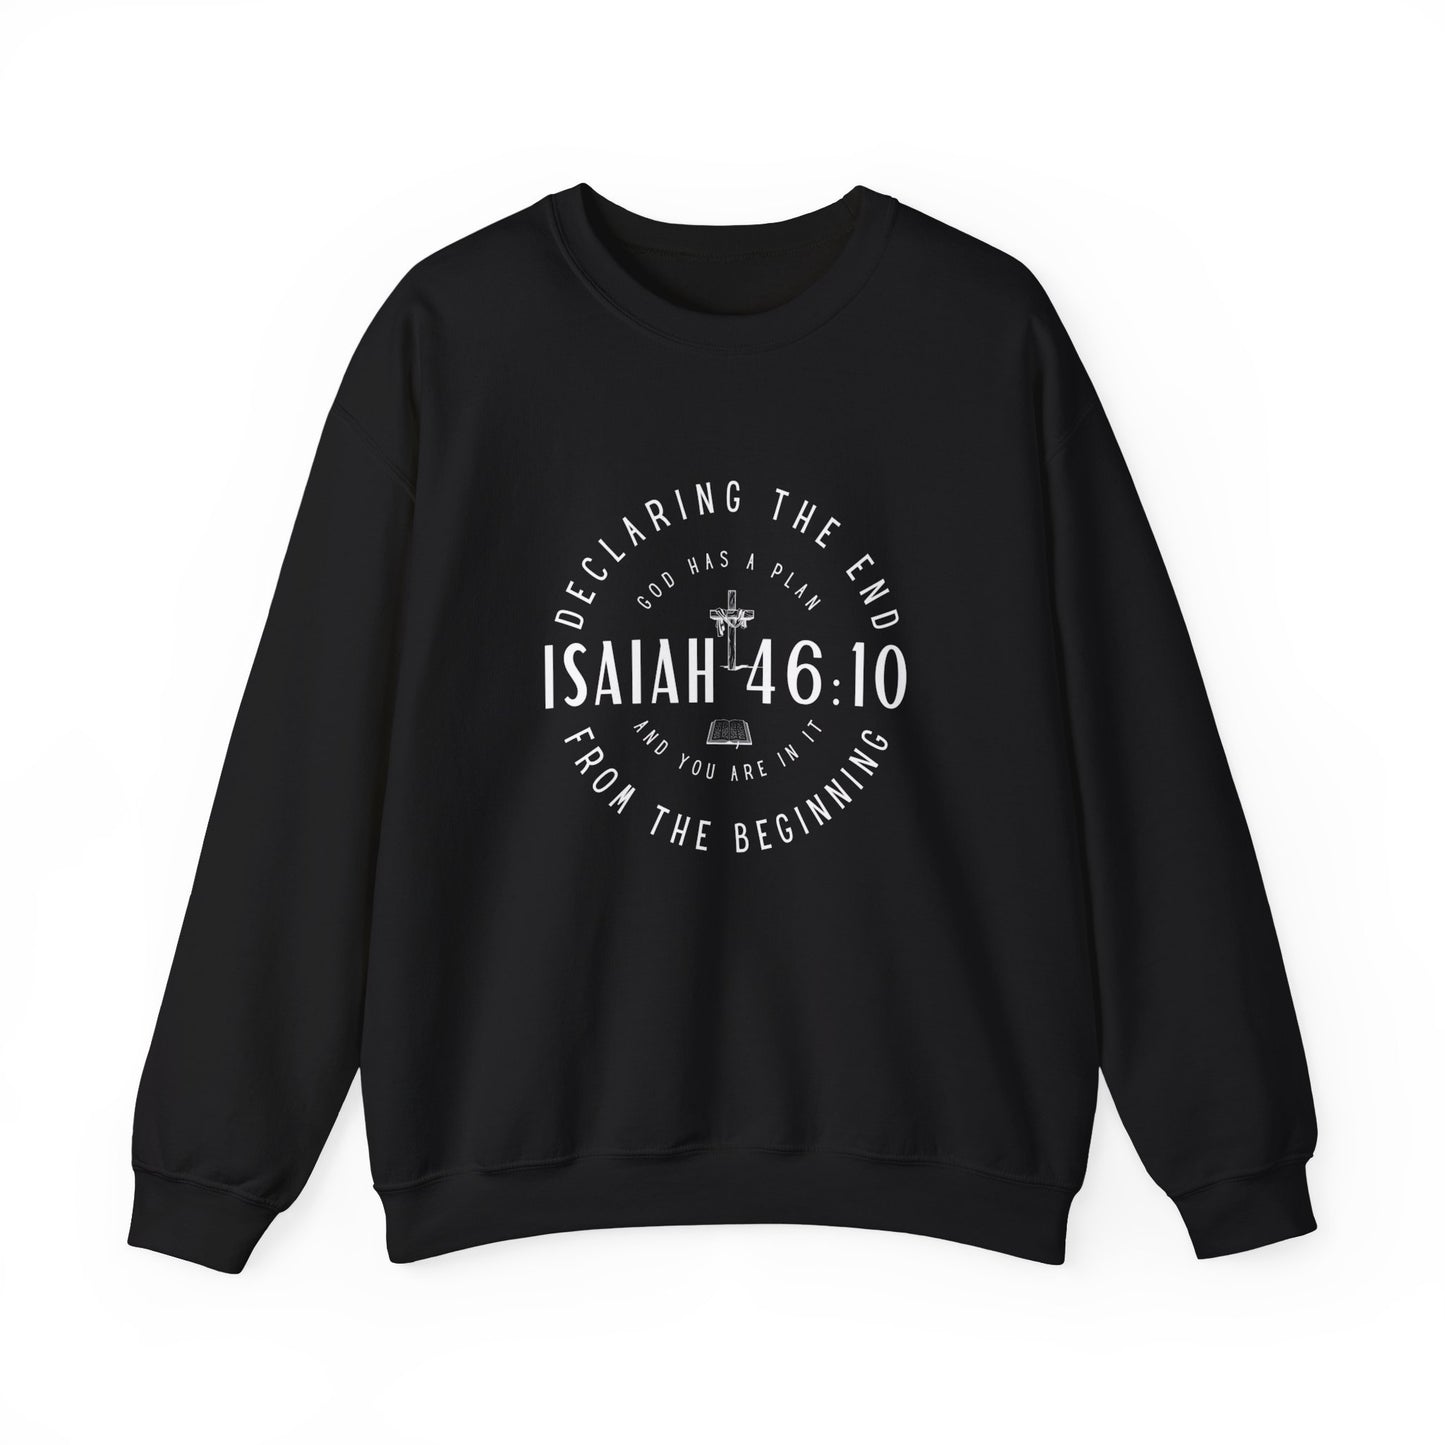 Sweatshirt, Isaiah 46.10, Gildan 18000, men and women, black